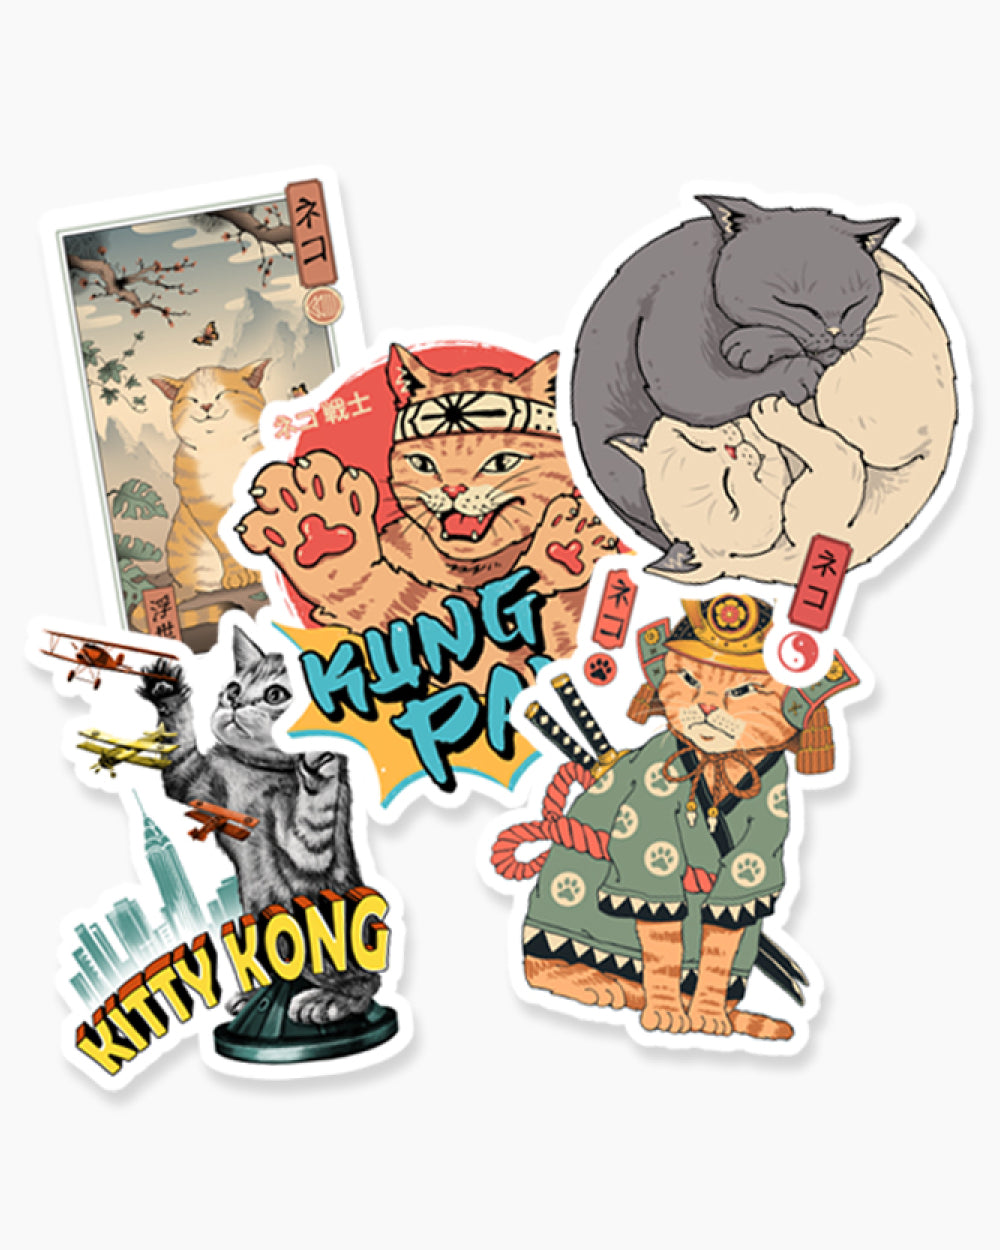 The Trinidad Cat Sticker Pack